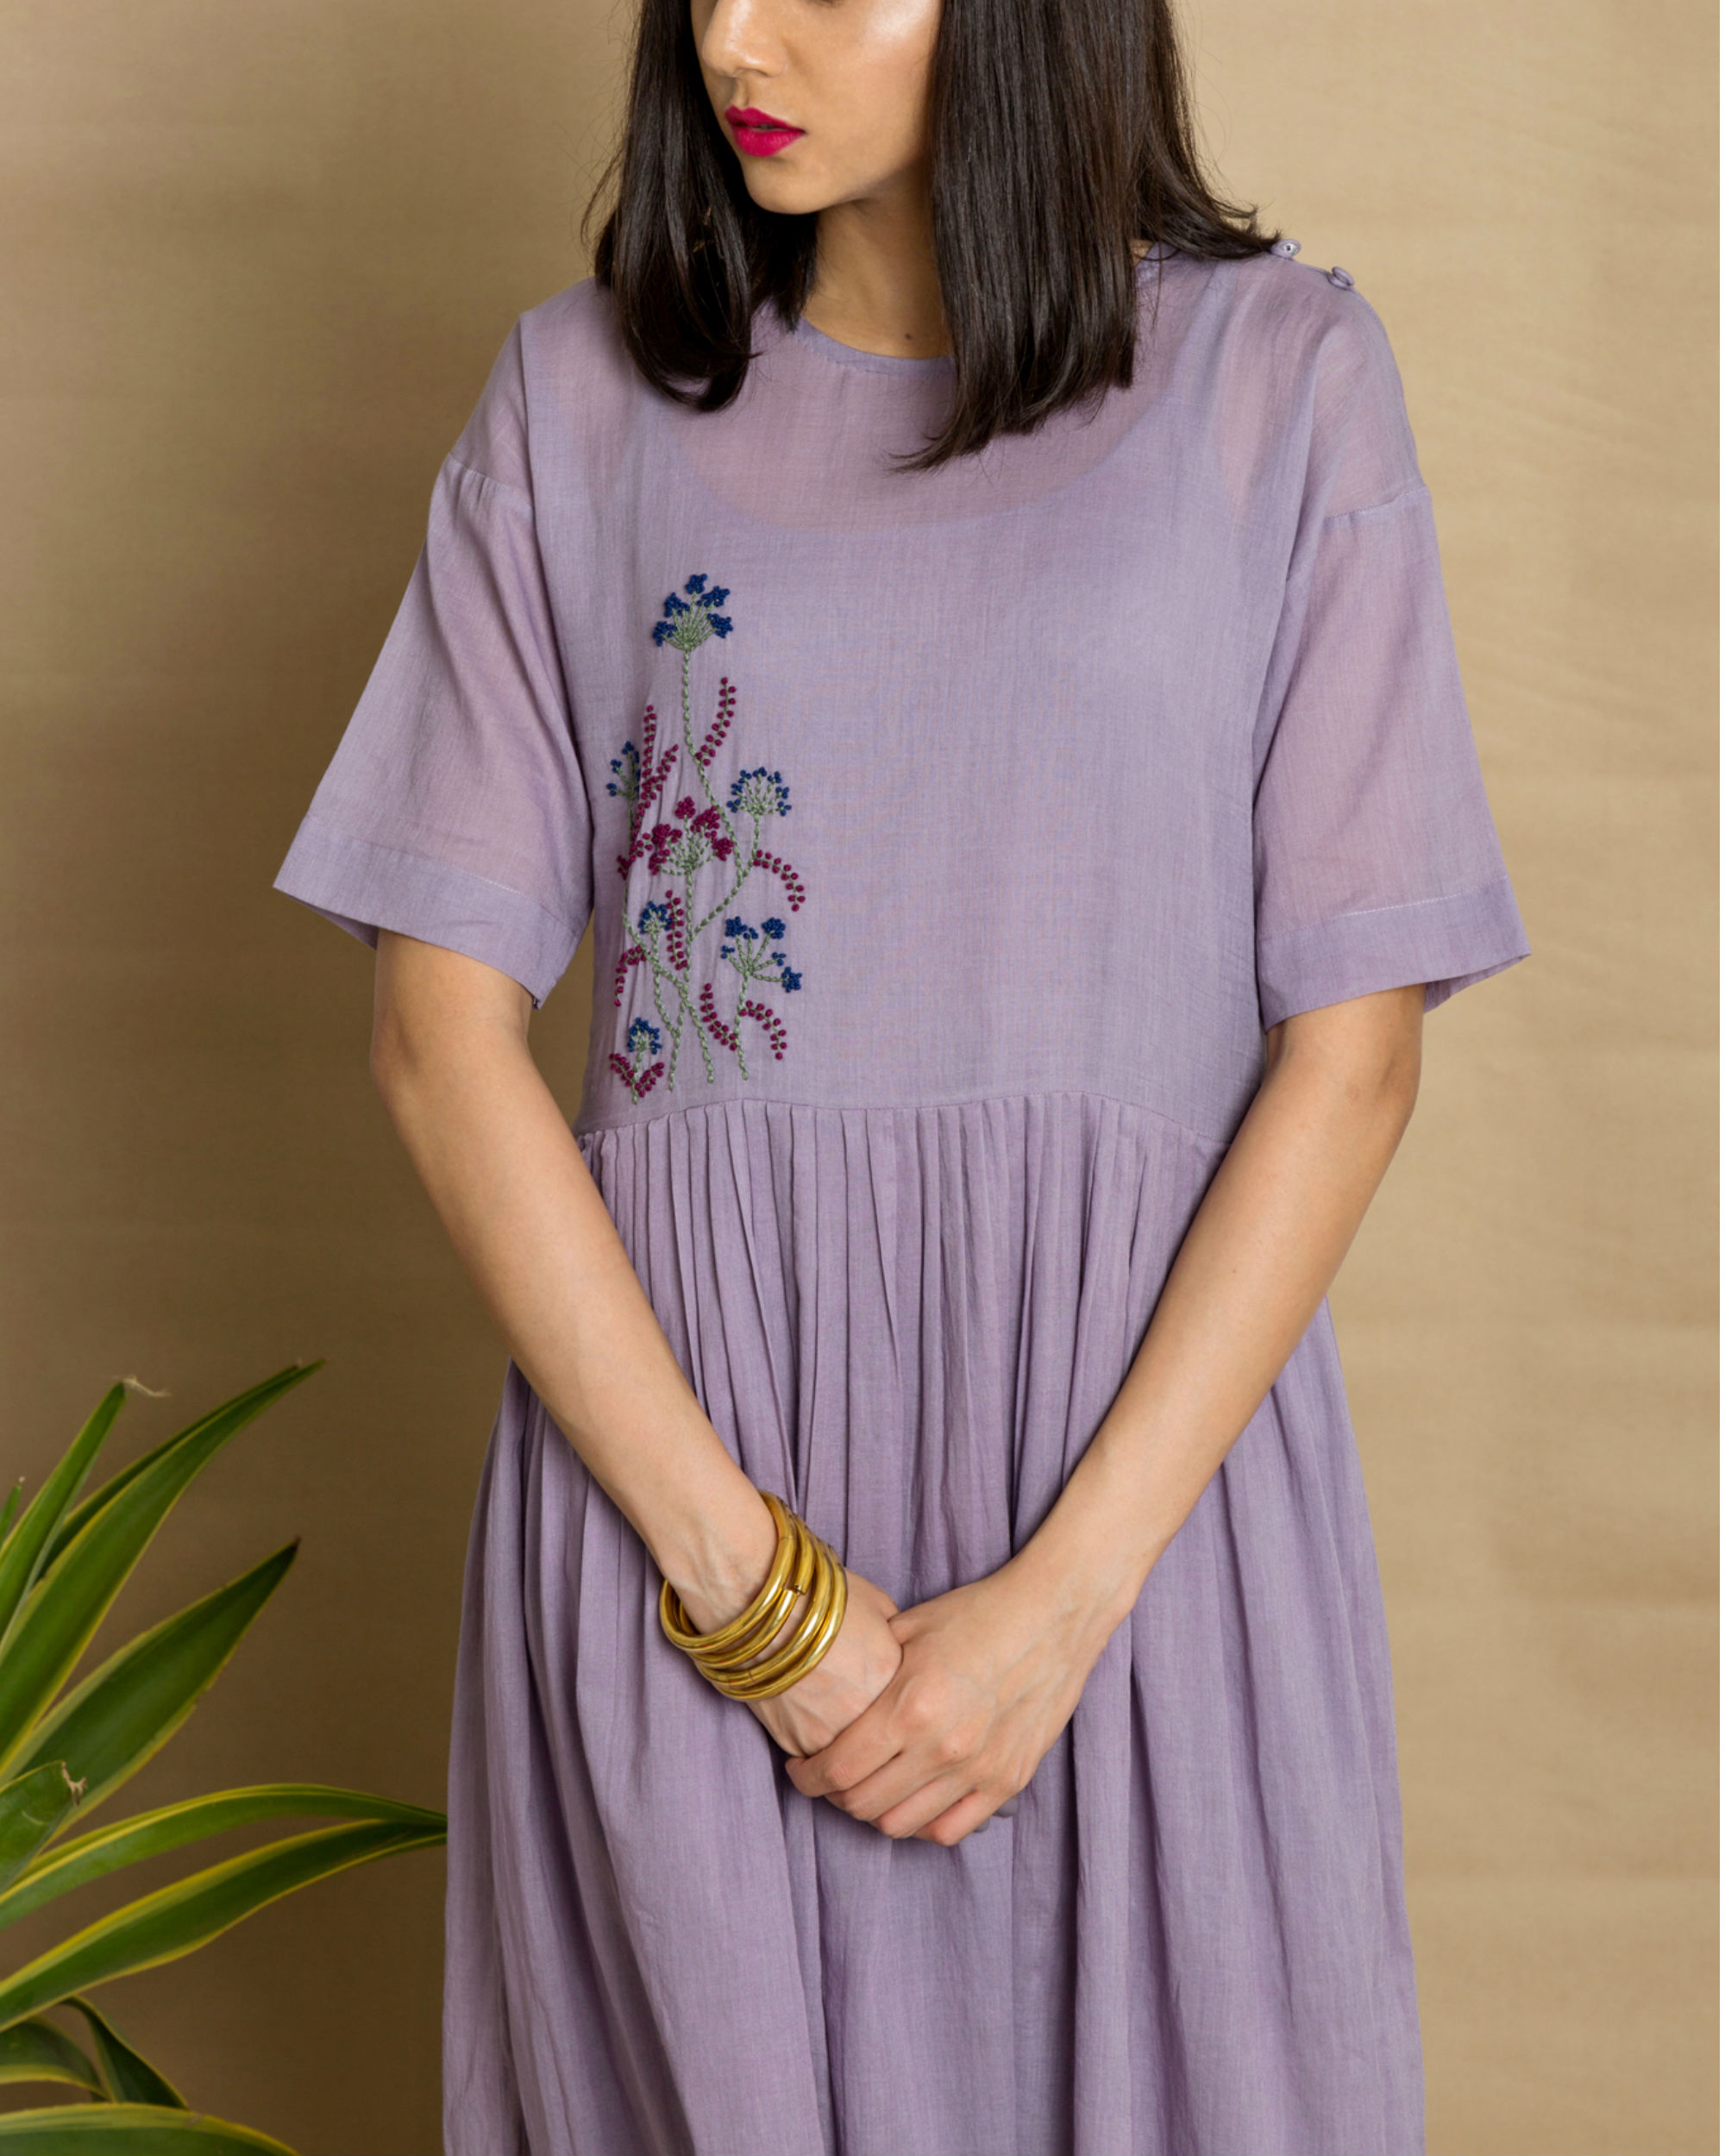 Ruchikalathlabel Hand Embroidered A-Line Dress